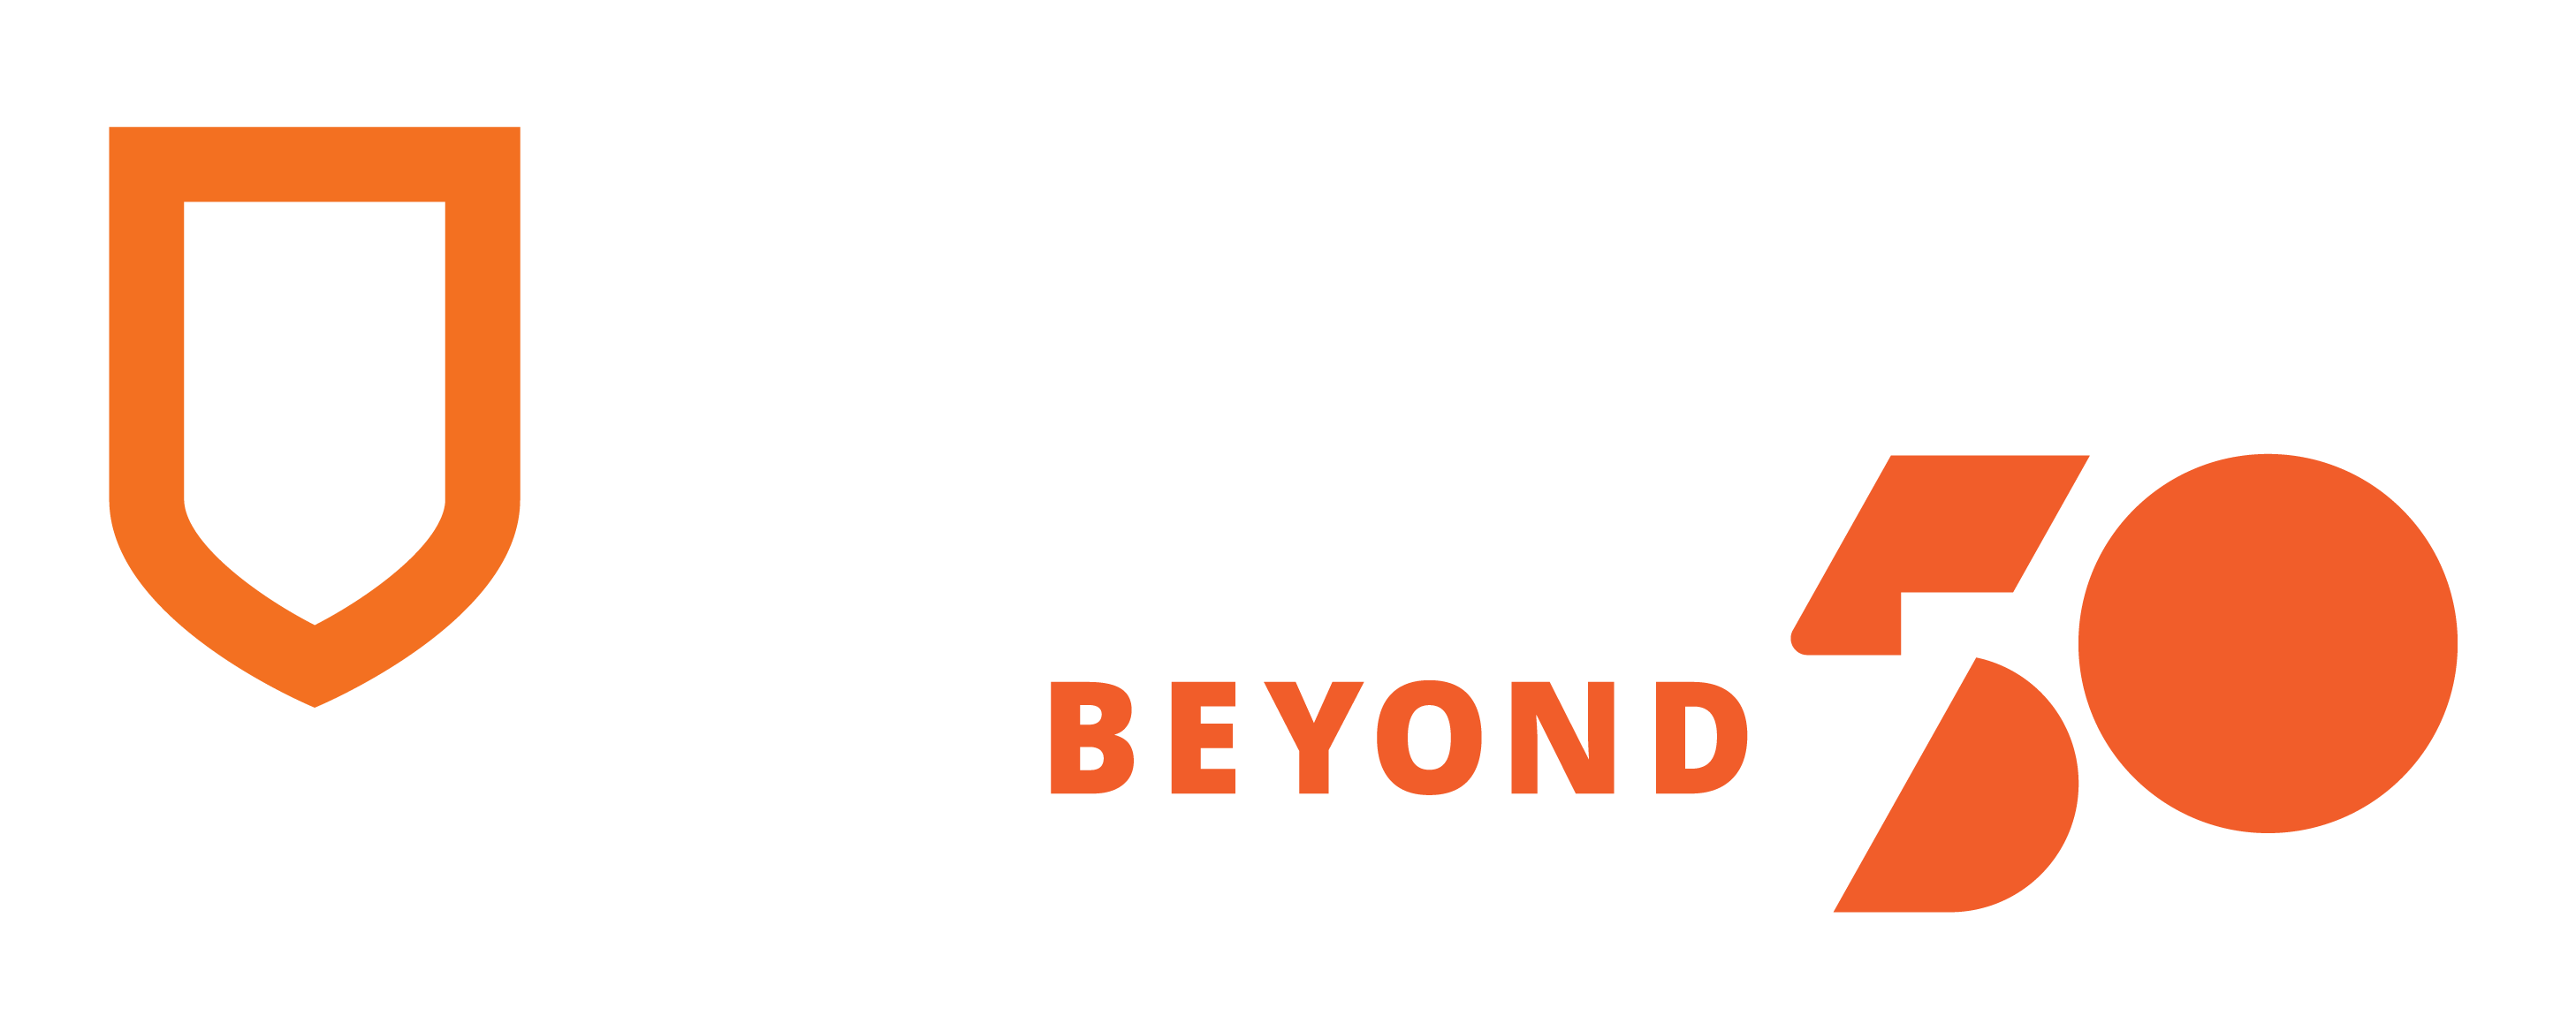 Athabascau University Beyond 50 Logo